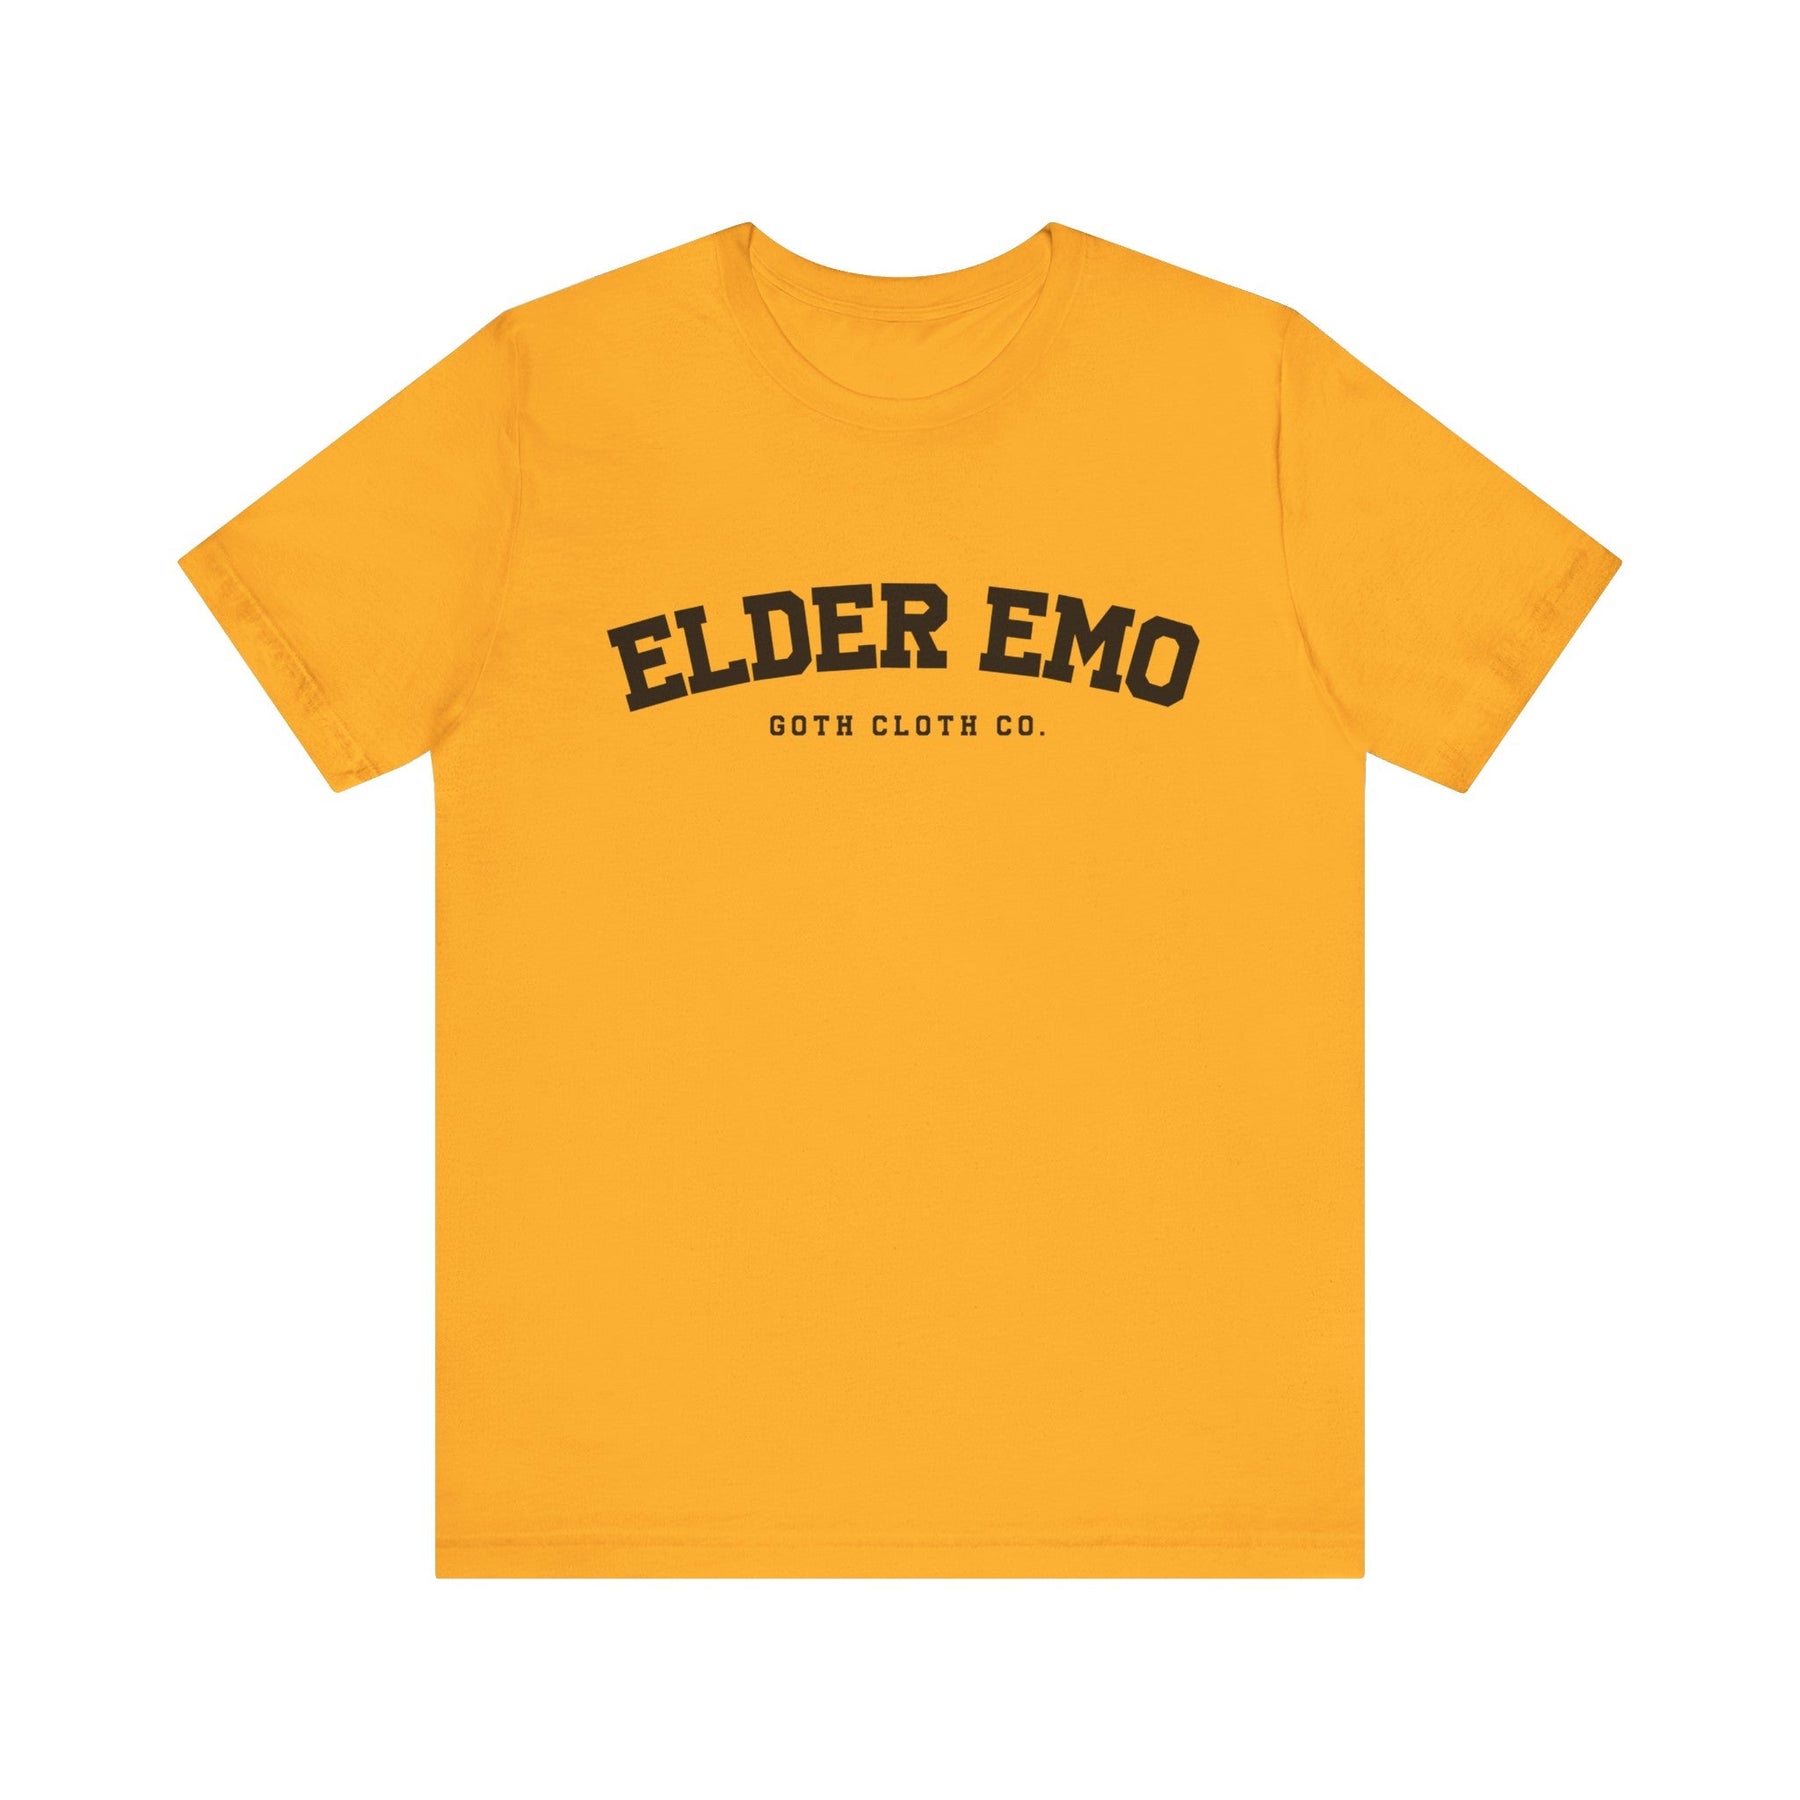 Elder Emo Short Sleeve Tee - Goth Cloth Co.T - Shirt28377569705882619726